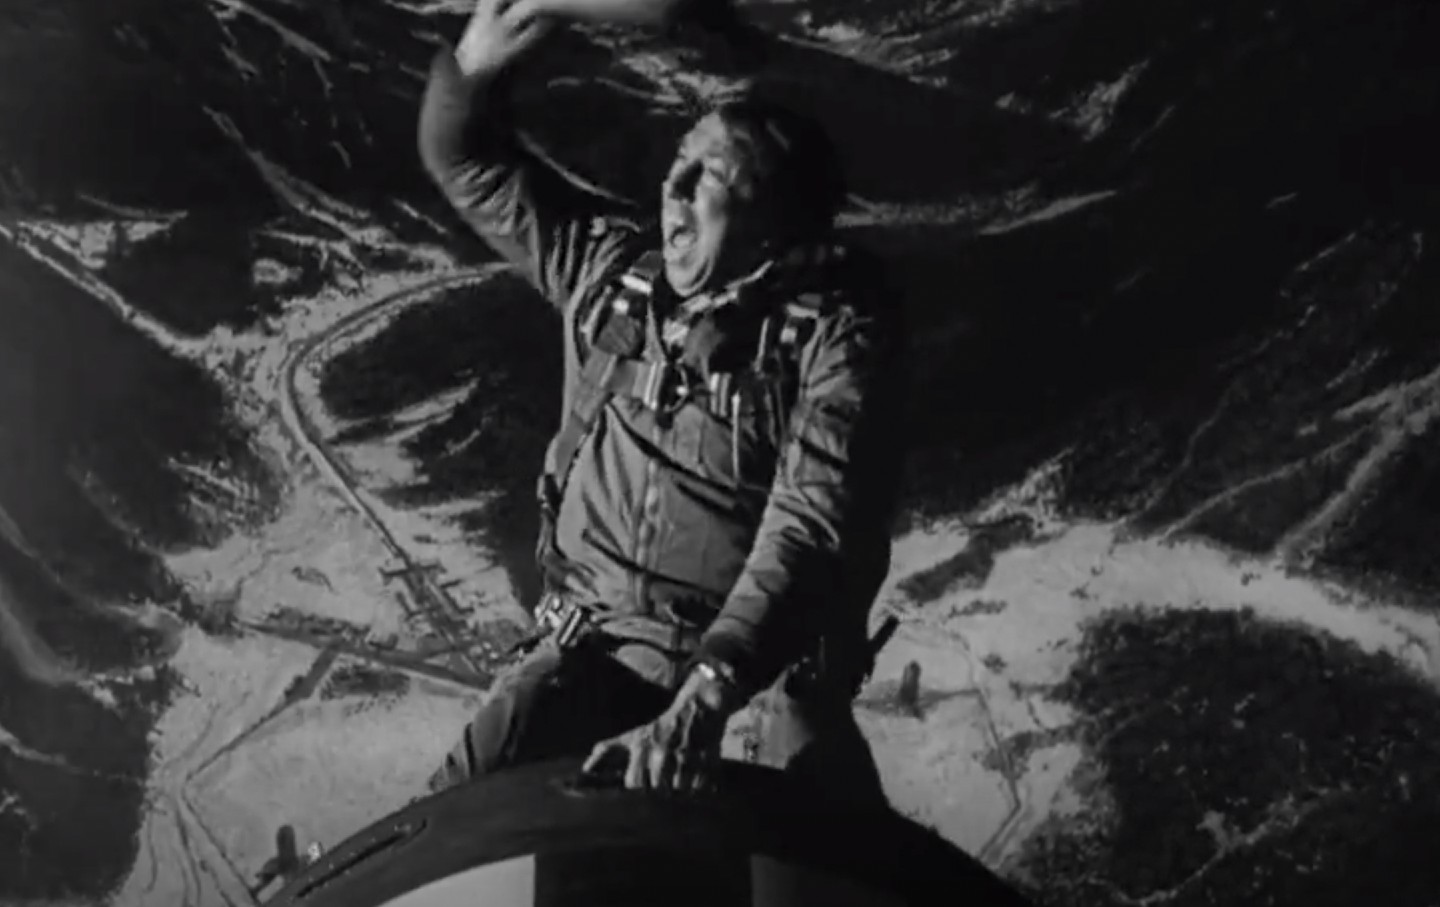 Actor Slim Pickens rides the bomb, waving his cowboy hat.